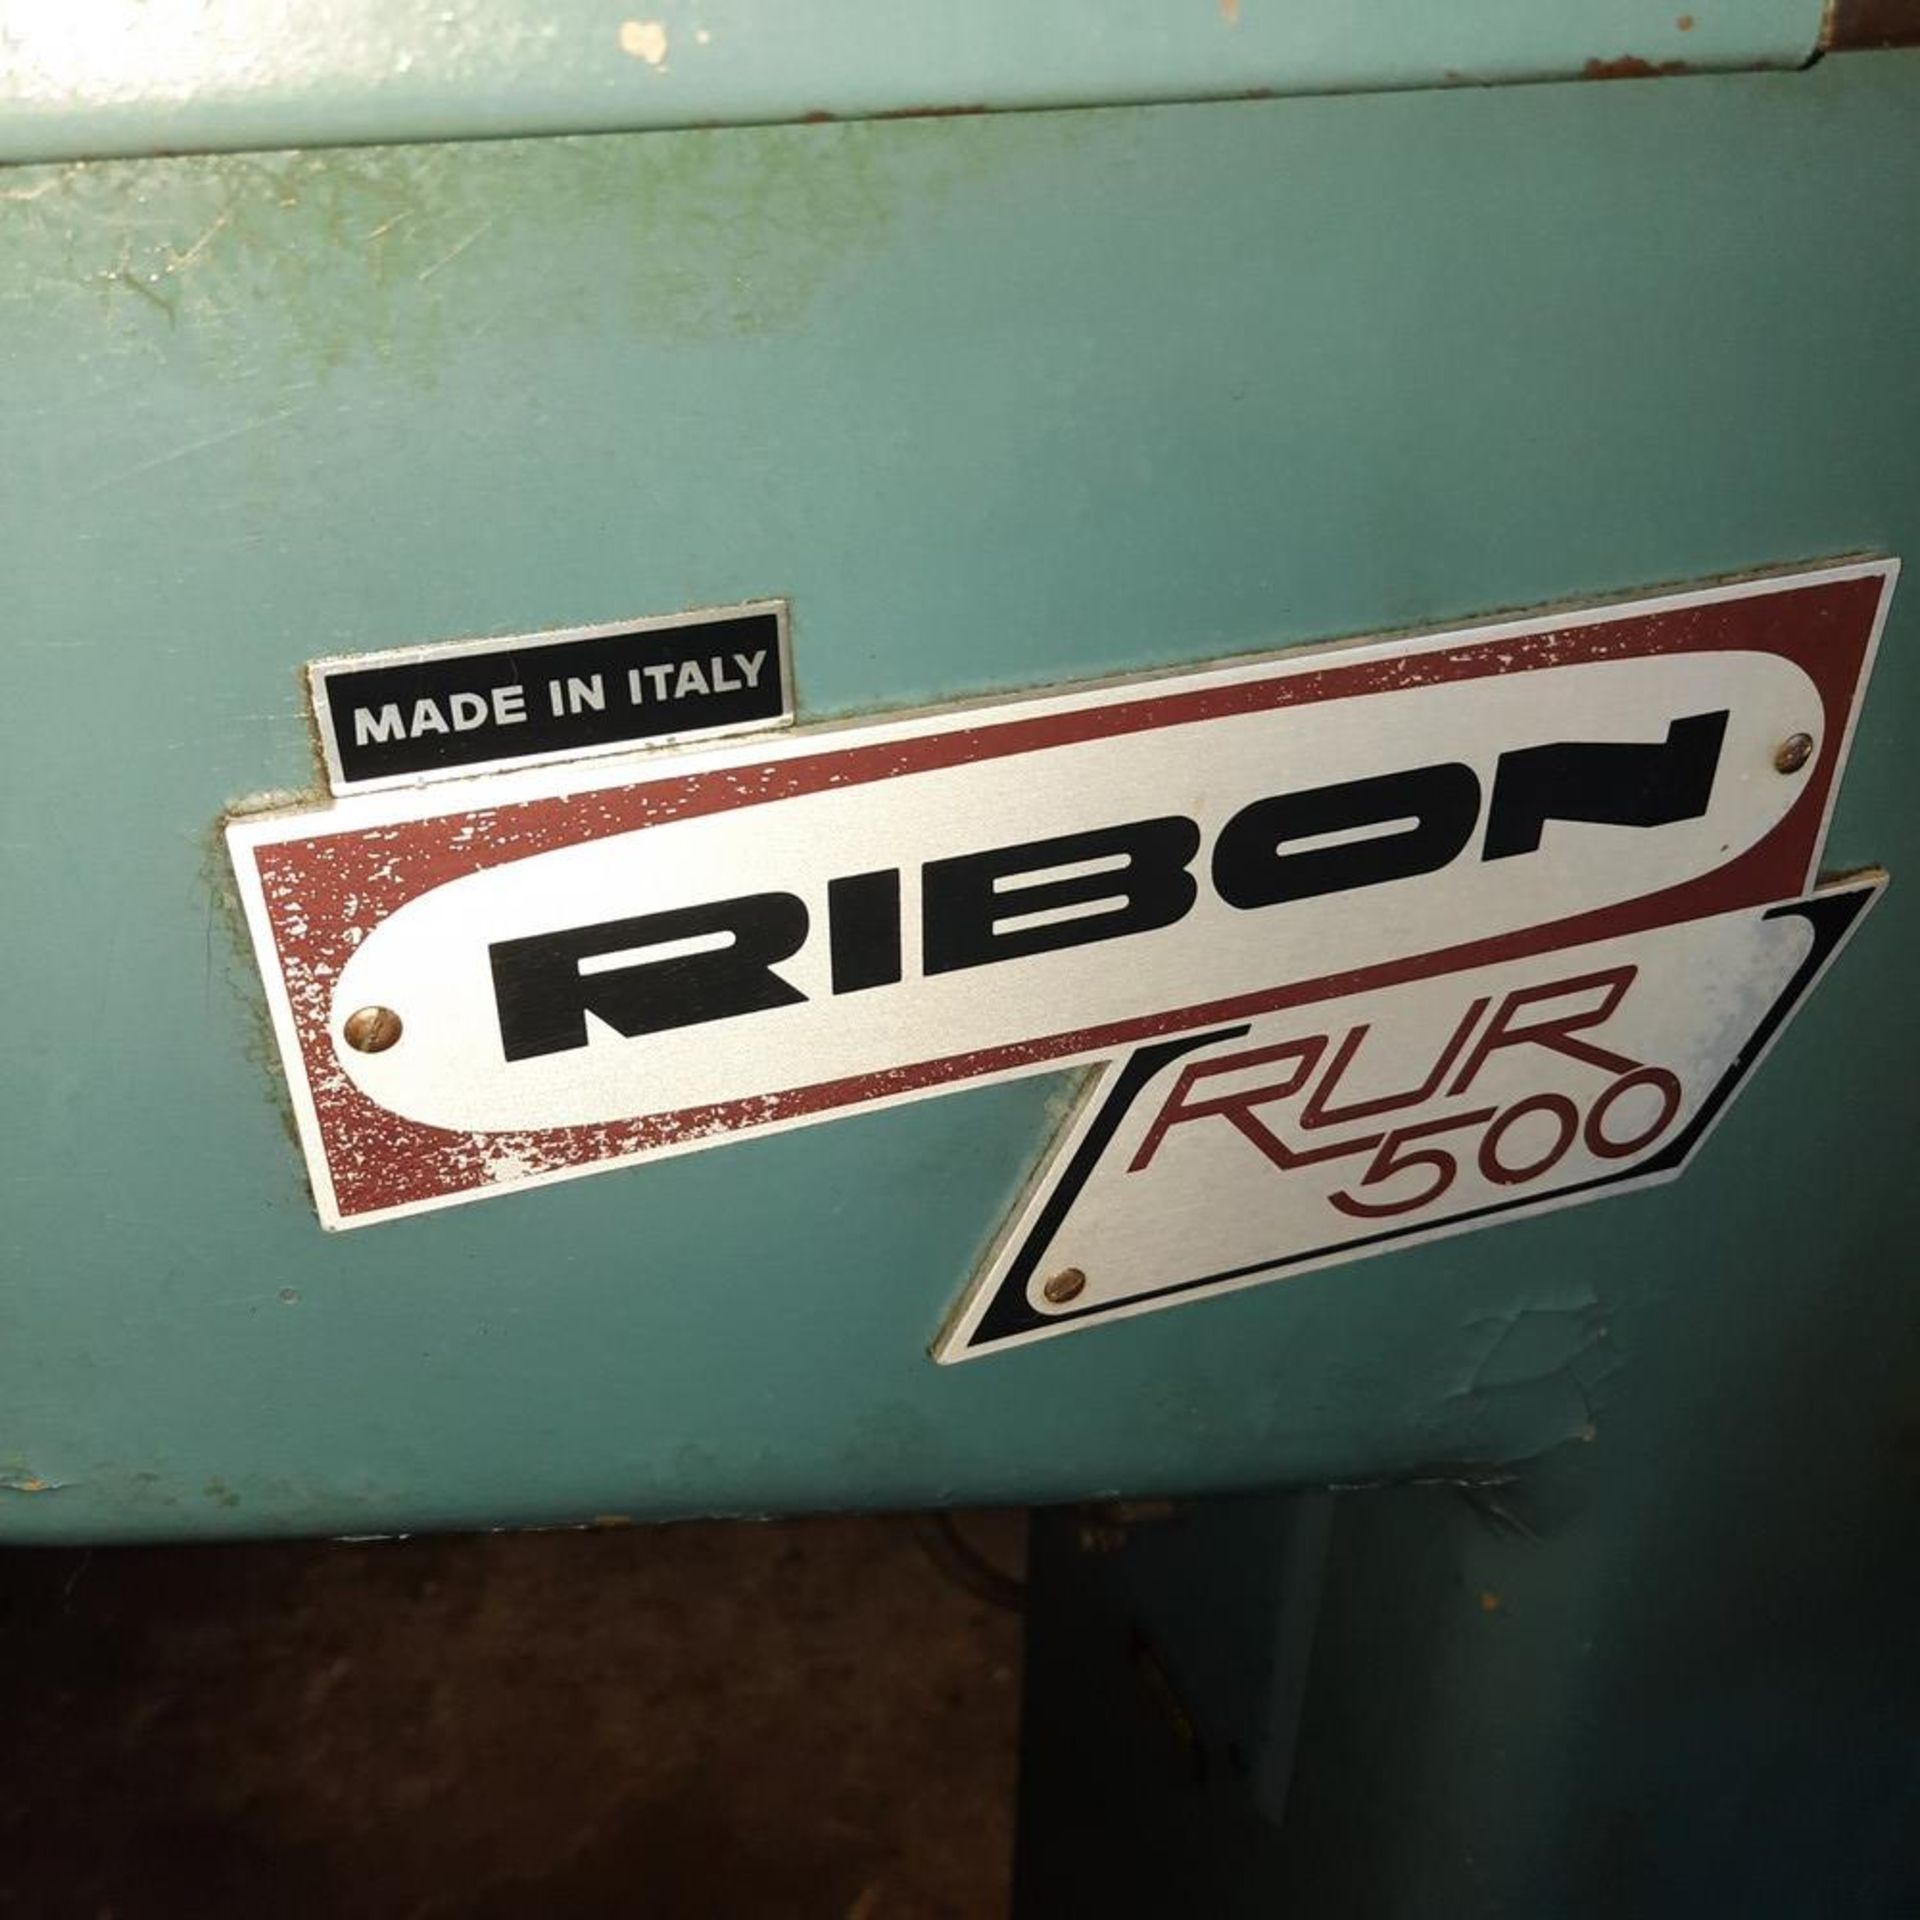 RIBON Cyndrical Grinding Machine, mod: RUR 500 - Image 8 of 9